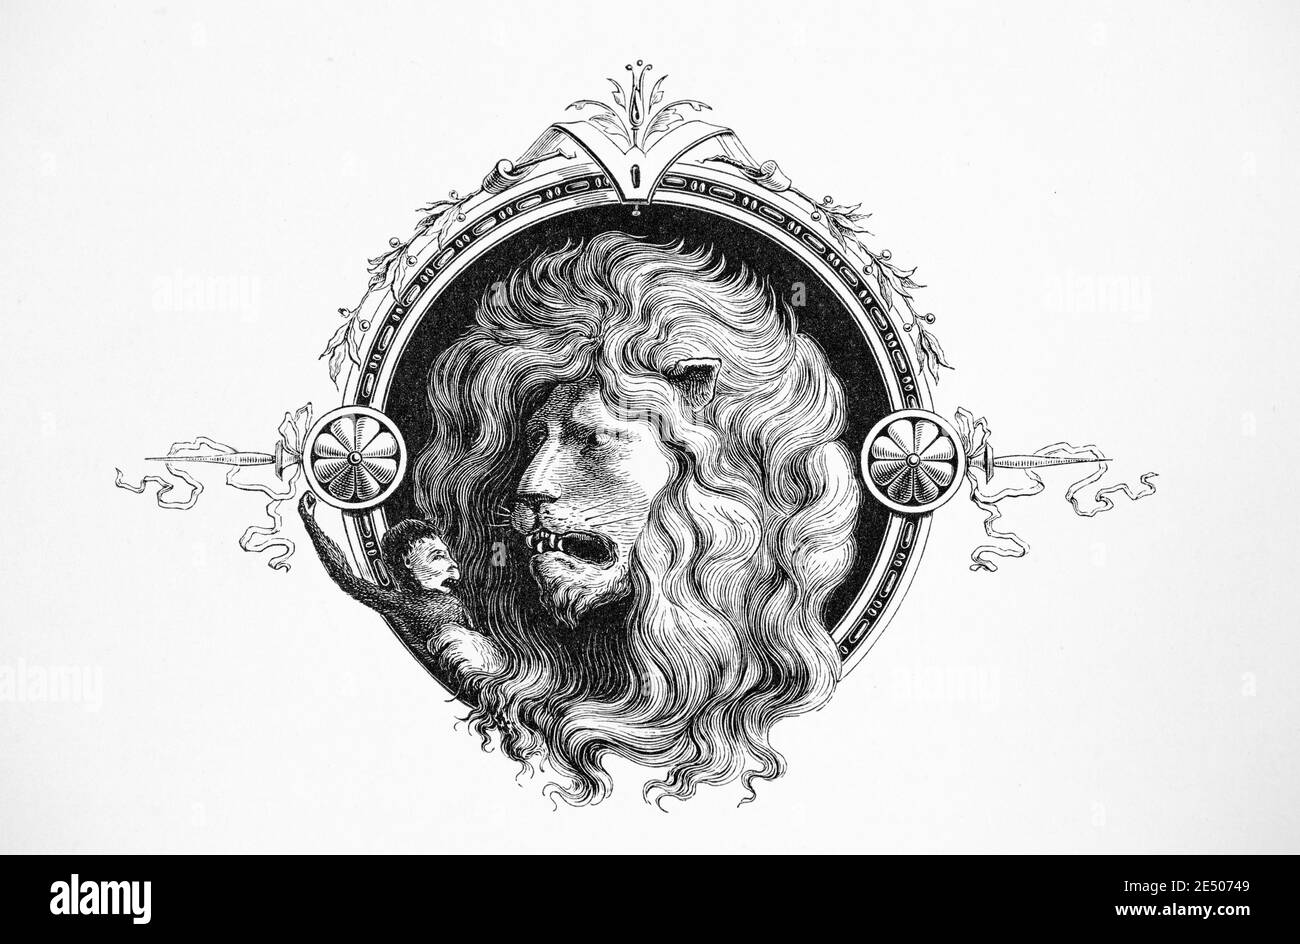 Illustration to Heine´s poem "Epilog", an epilogue on lions, German writer  and poet Heinrich Heine, poem collection Romancero, 1880 Stock Photo - Alamy